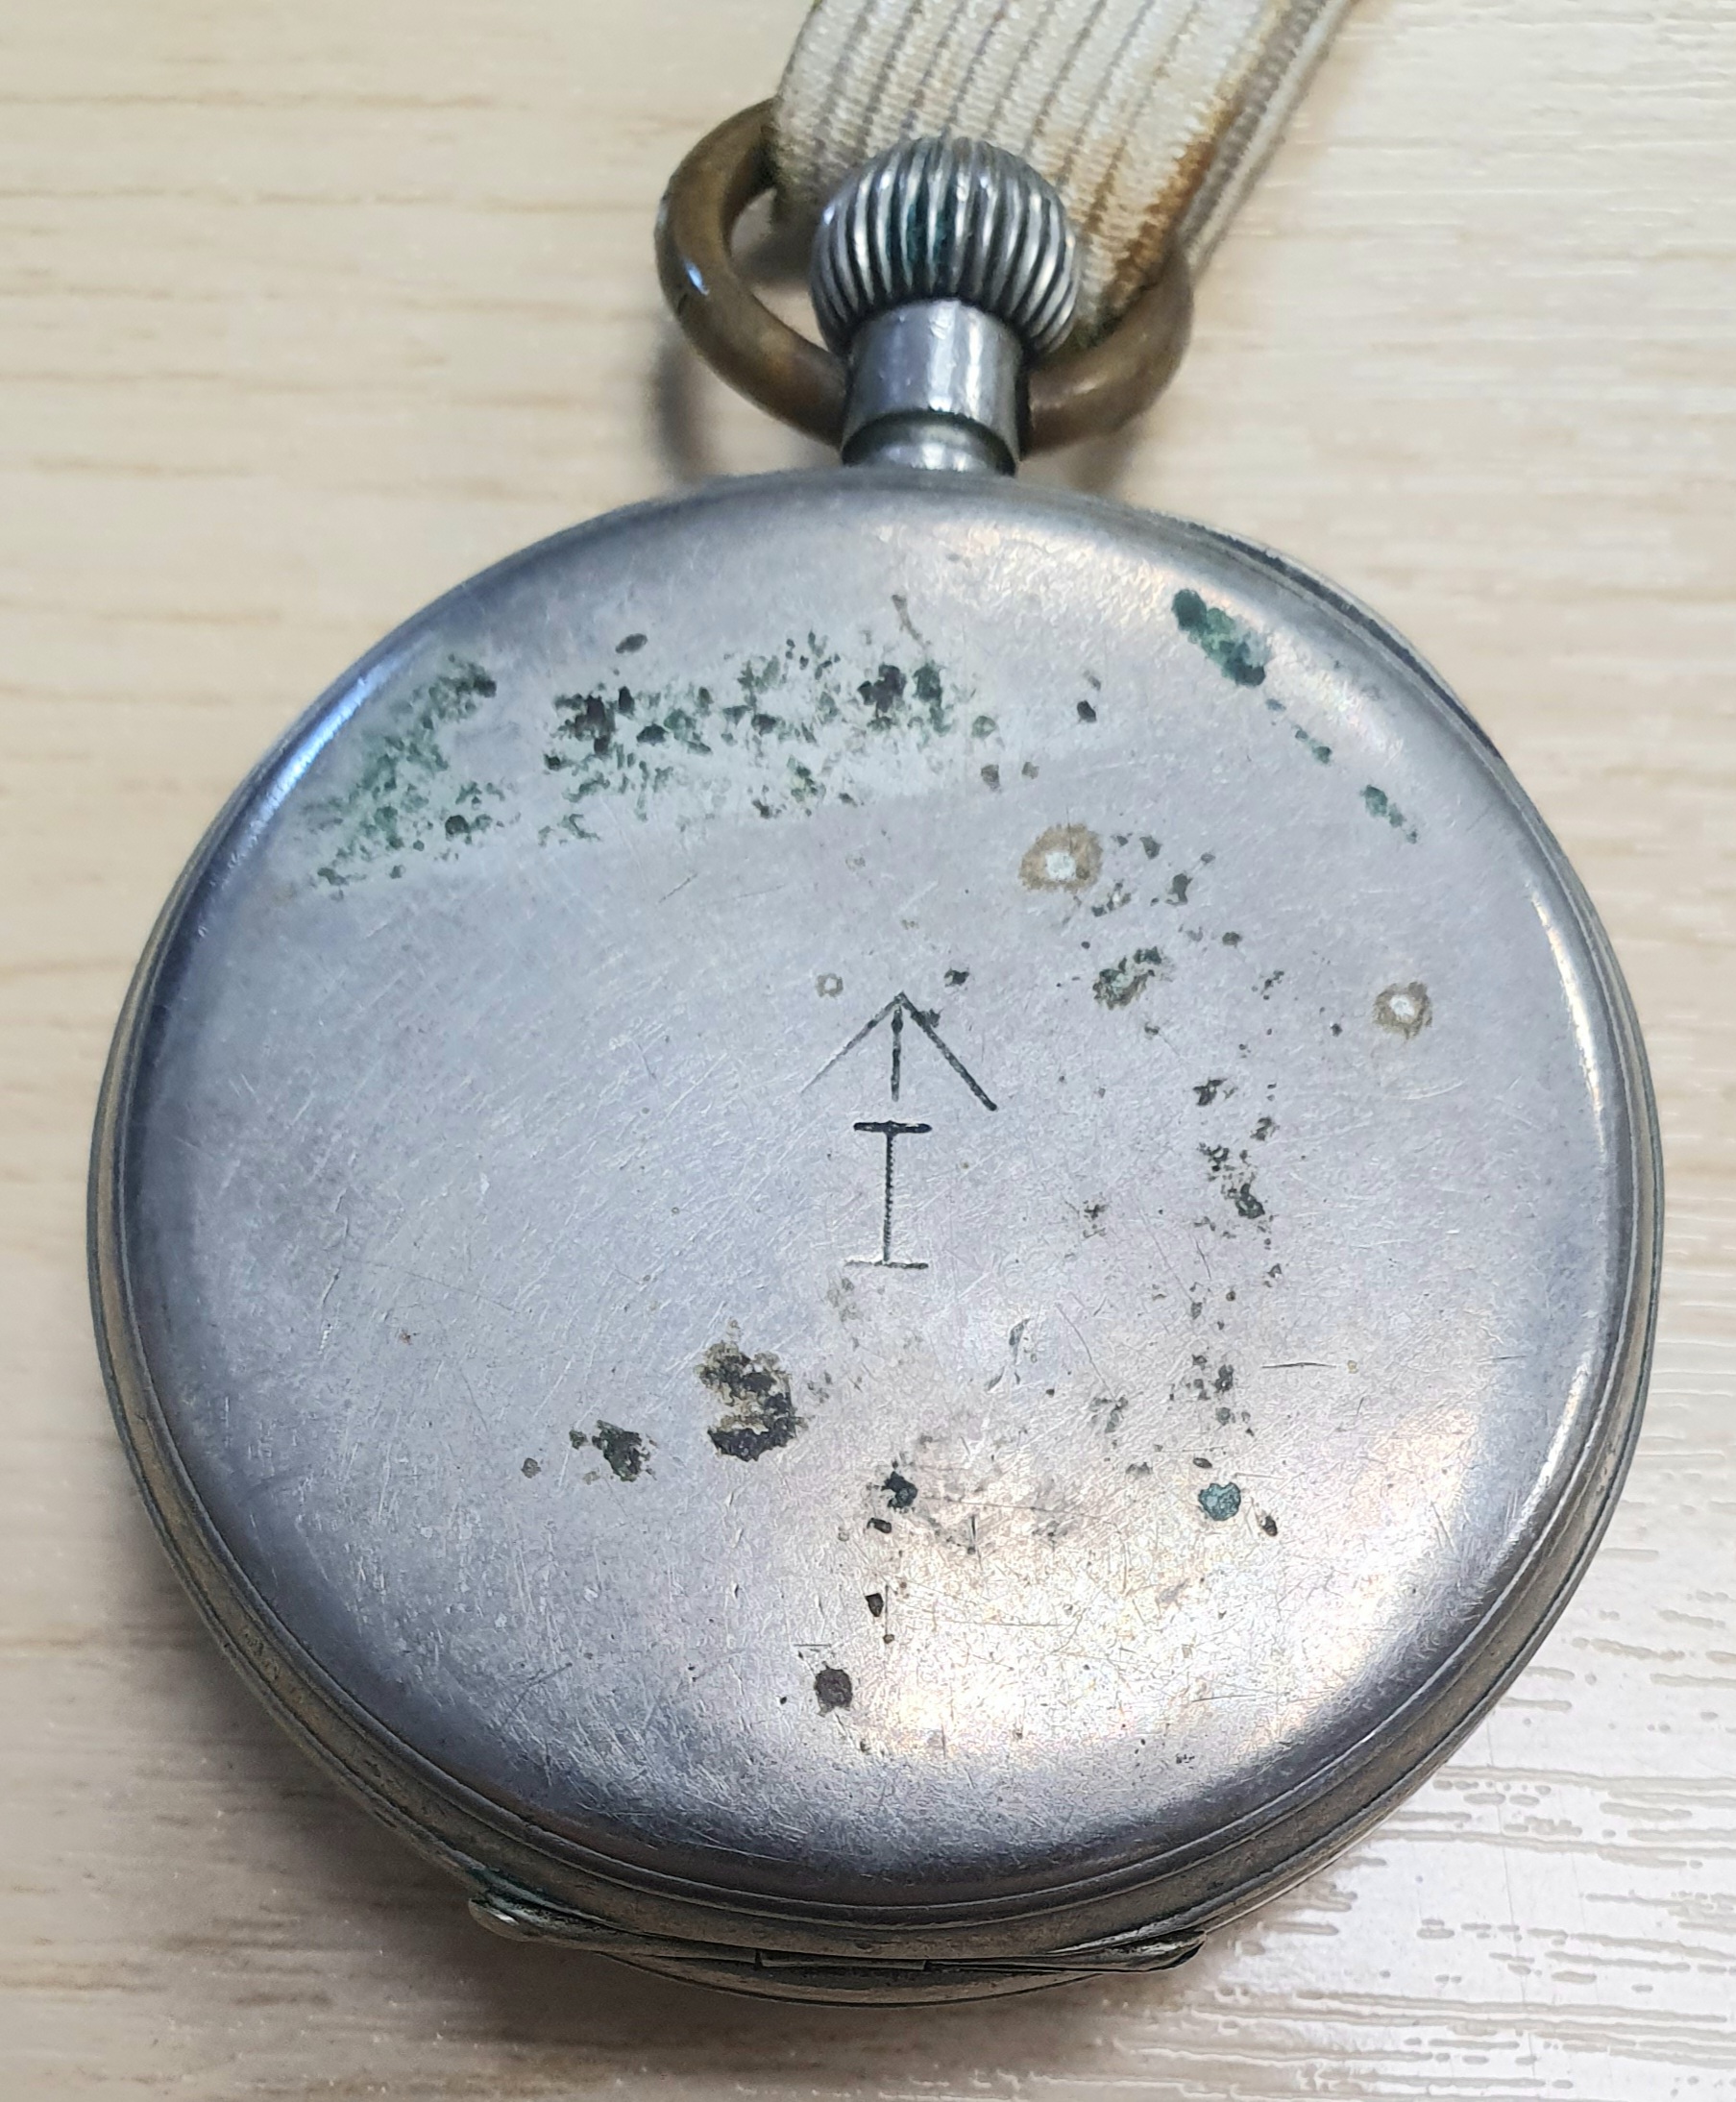 Zenith 1916 Steel Cased Pocket Watch, serial number 2026181, 45mm diameter - Image 4 of 5